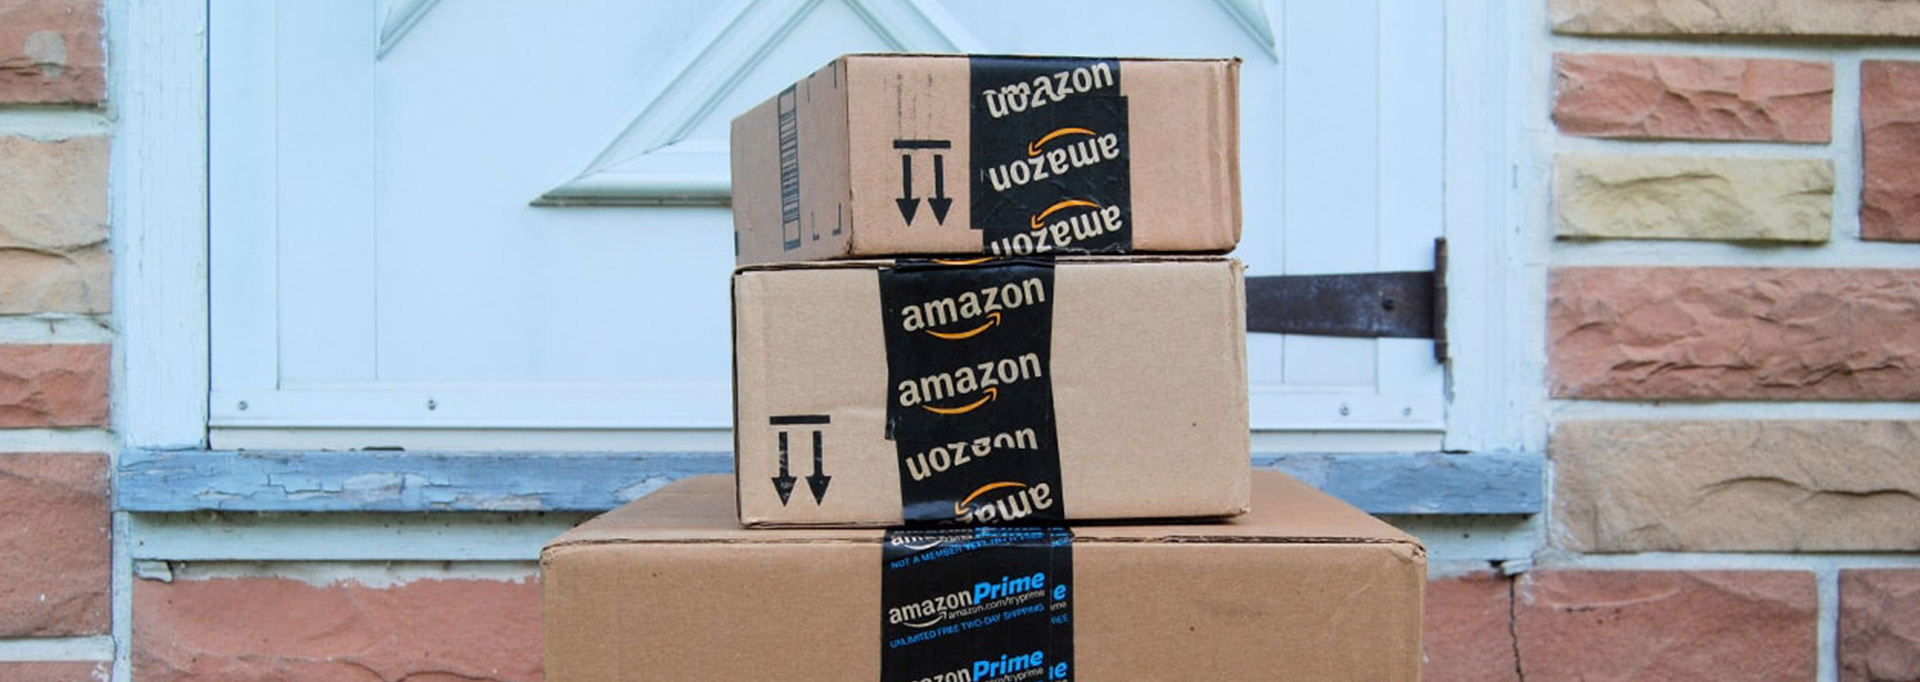 Amazon boxes at doorstep